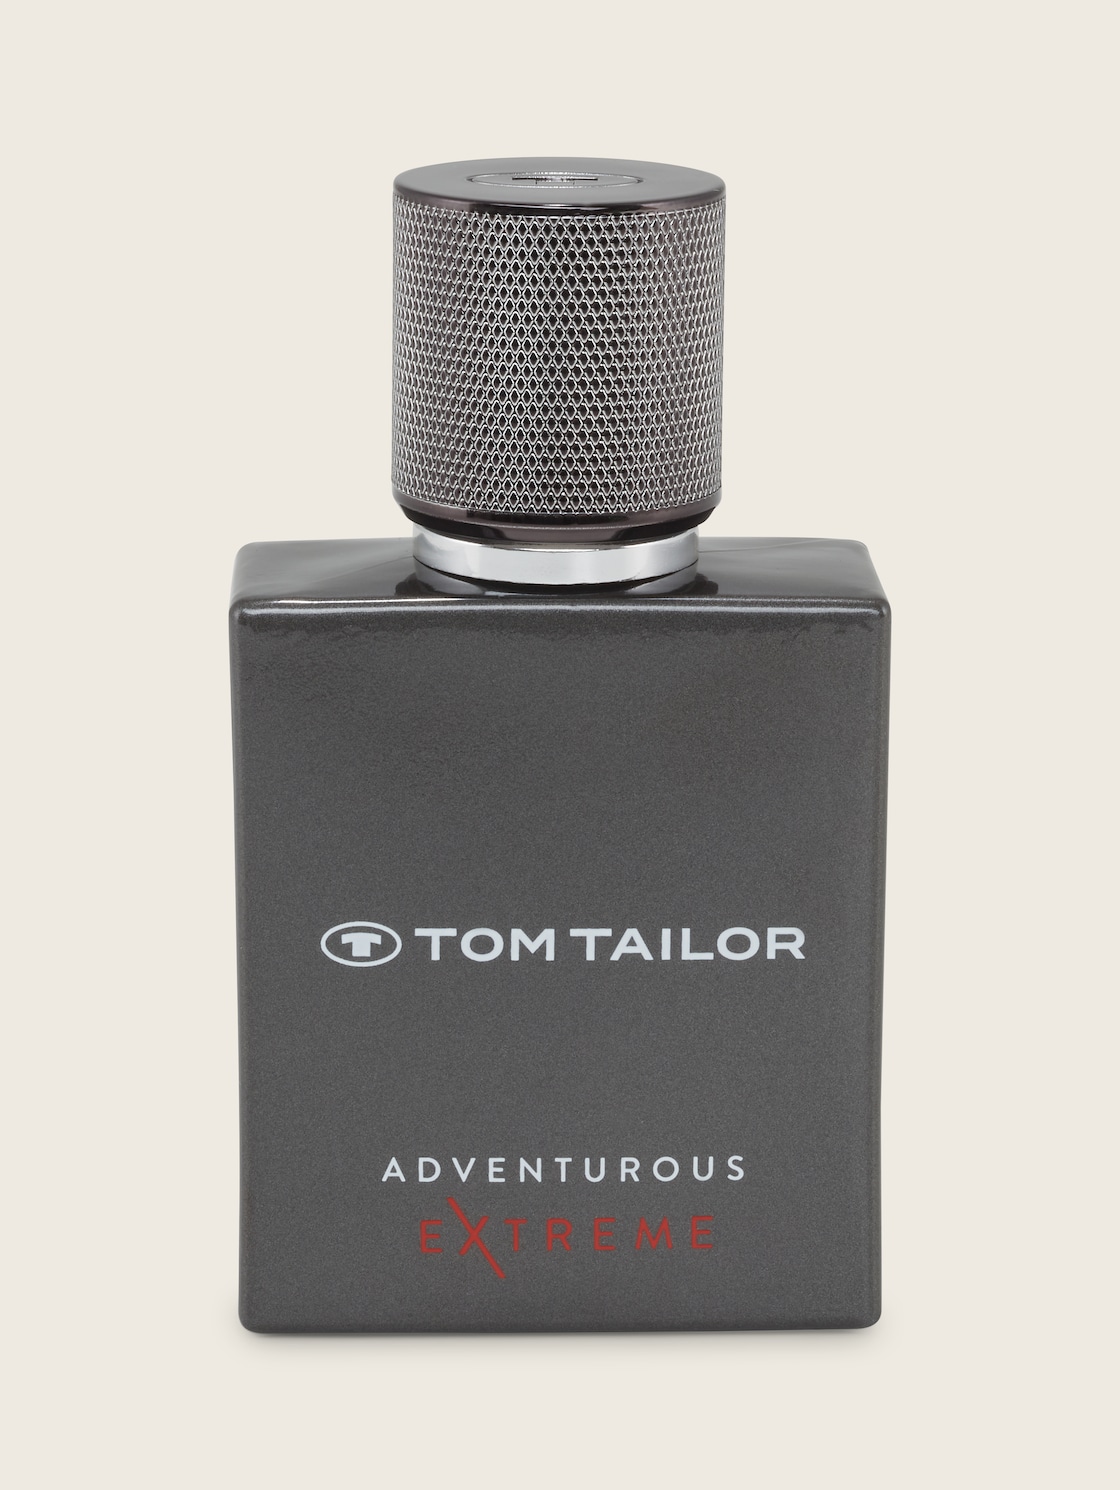 TOM TAILOR Herren Adventurous Extreme Eau de Toilette 30ml, grau, Uni, Gr. 30ml von Tom Tailor